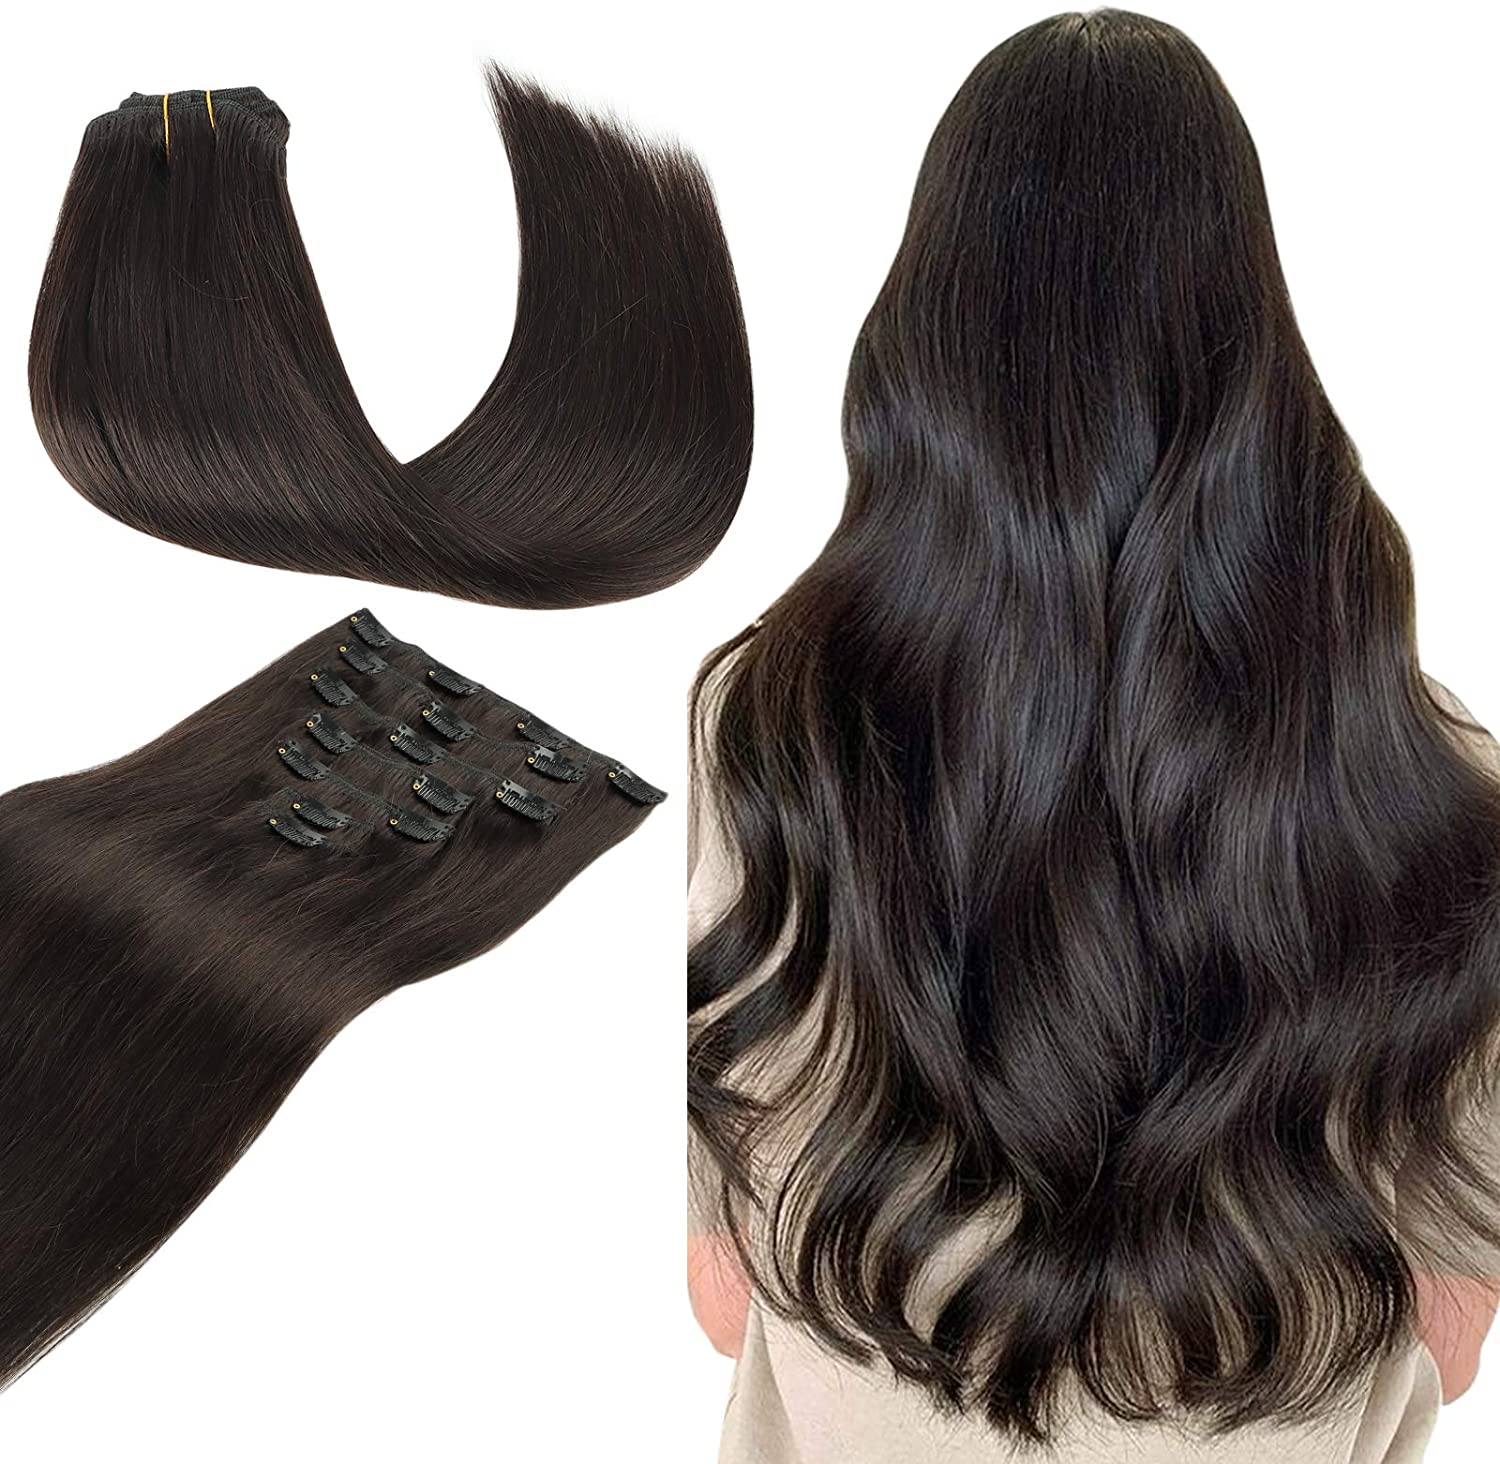 Luwel regular/ regular plus hair extensions clip in hair dark